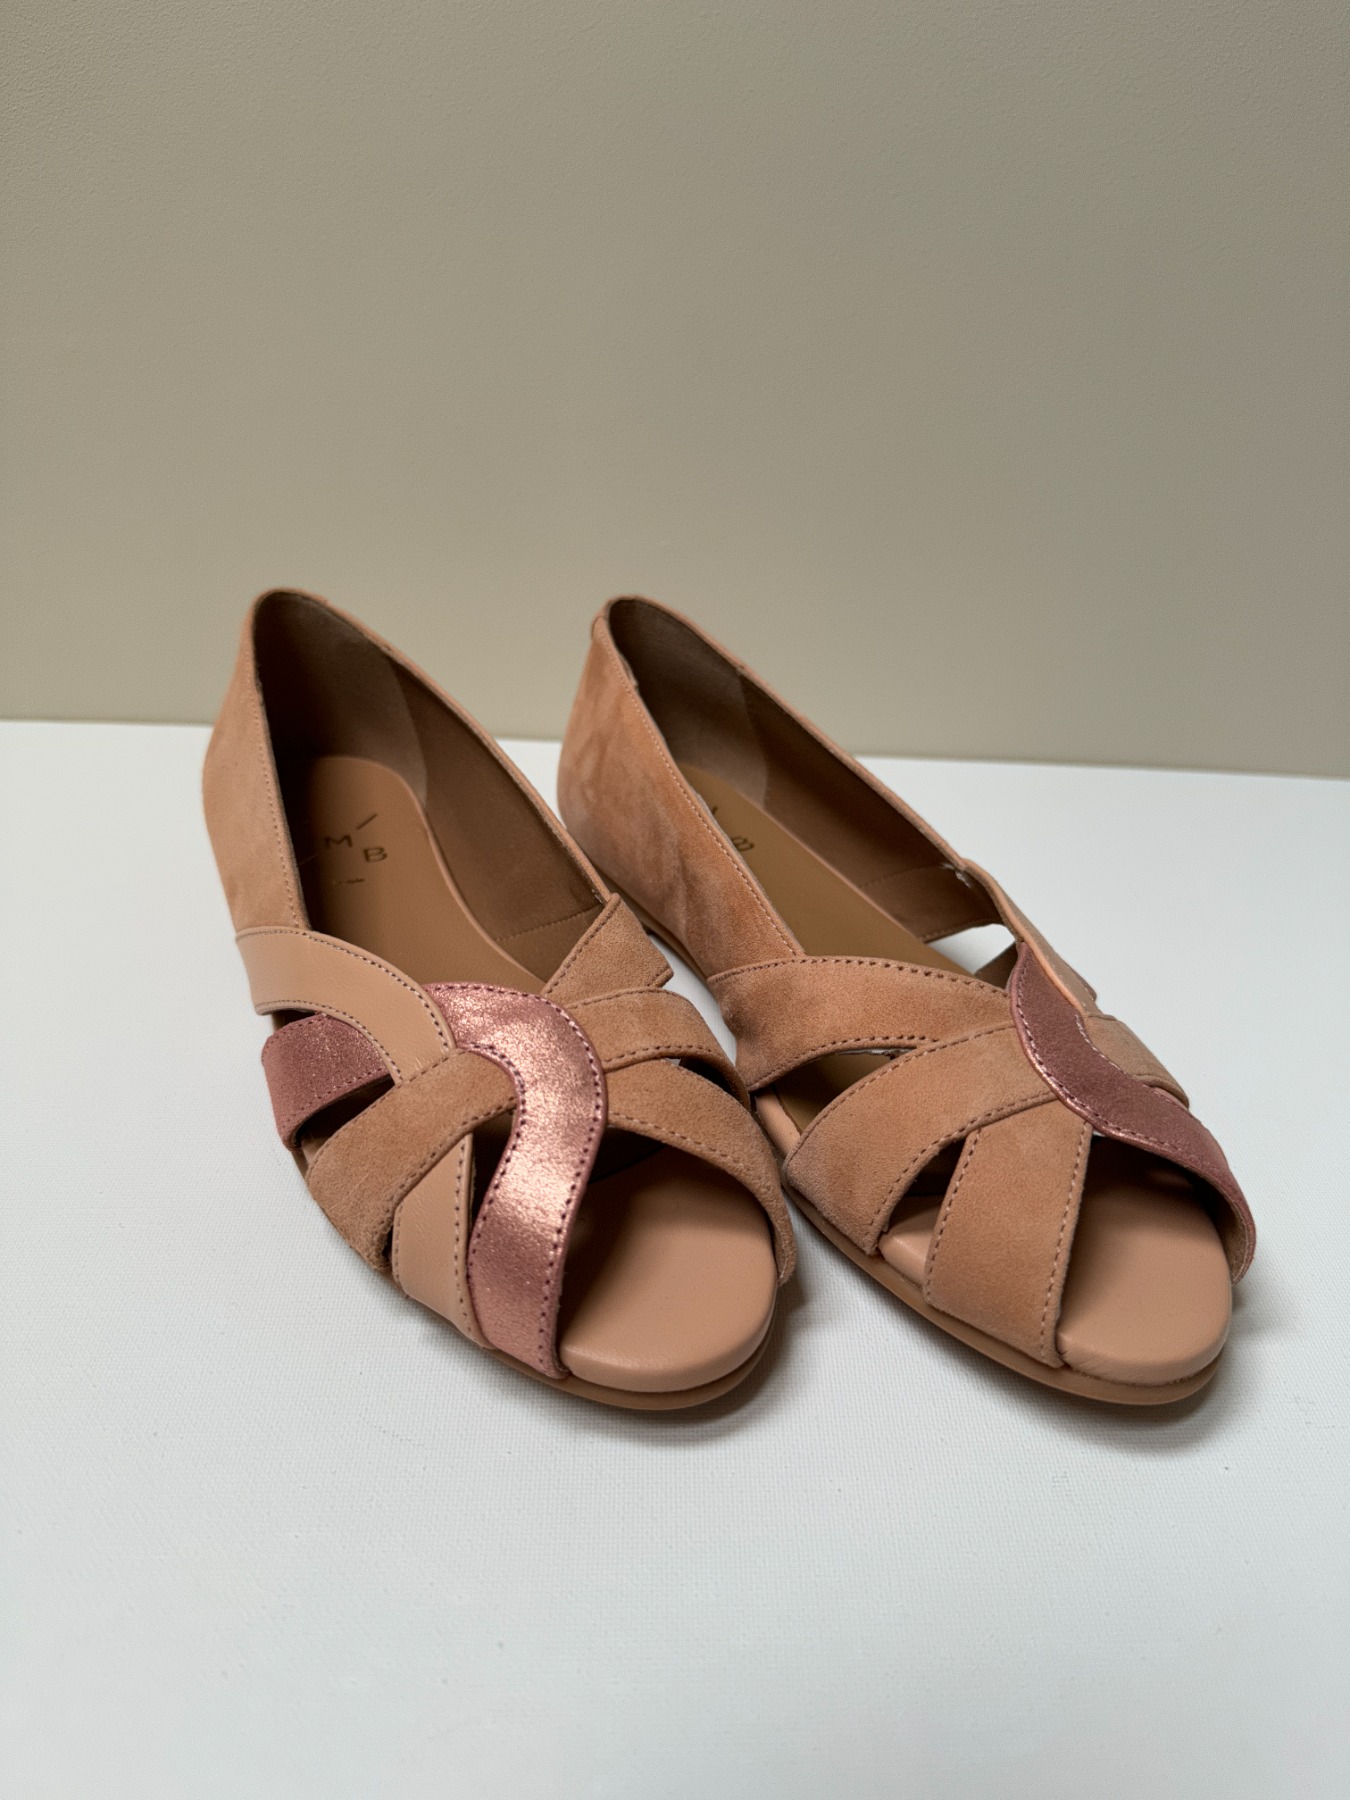 KMB Shoes - Ballerina AMELIA - Peach Cream